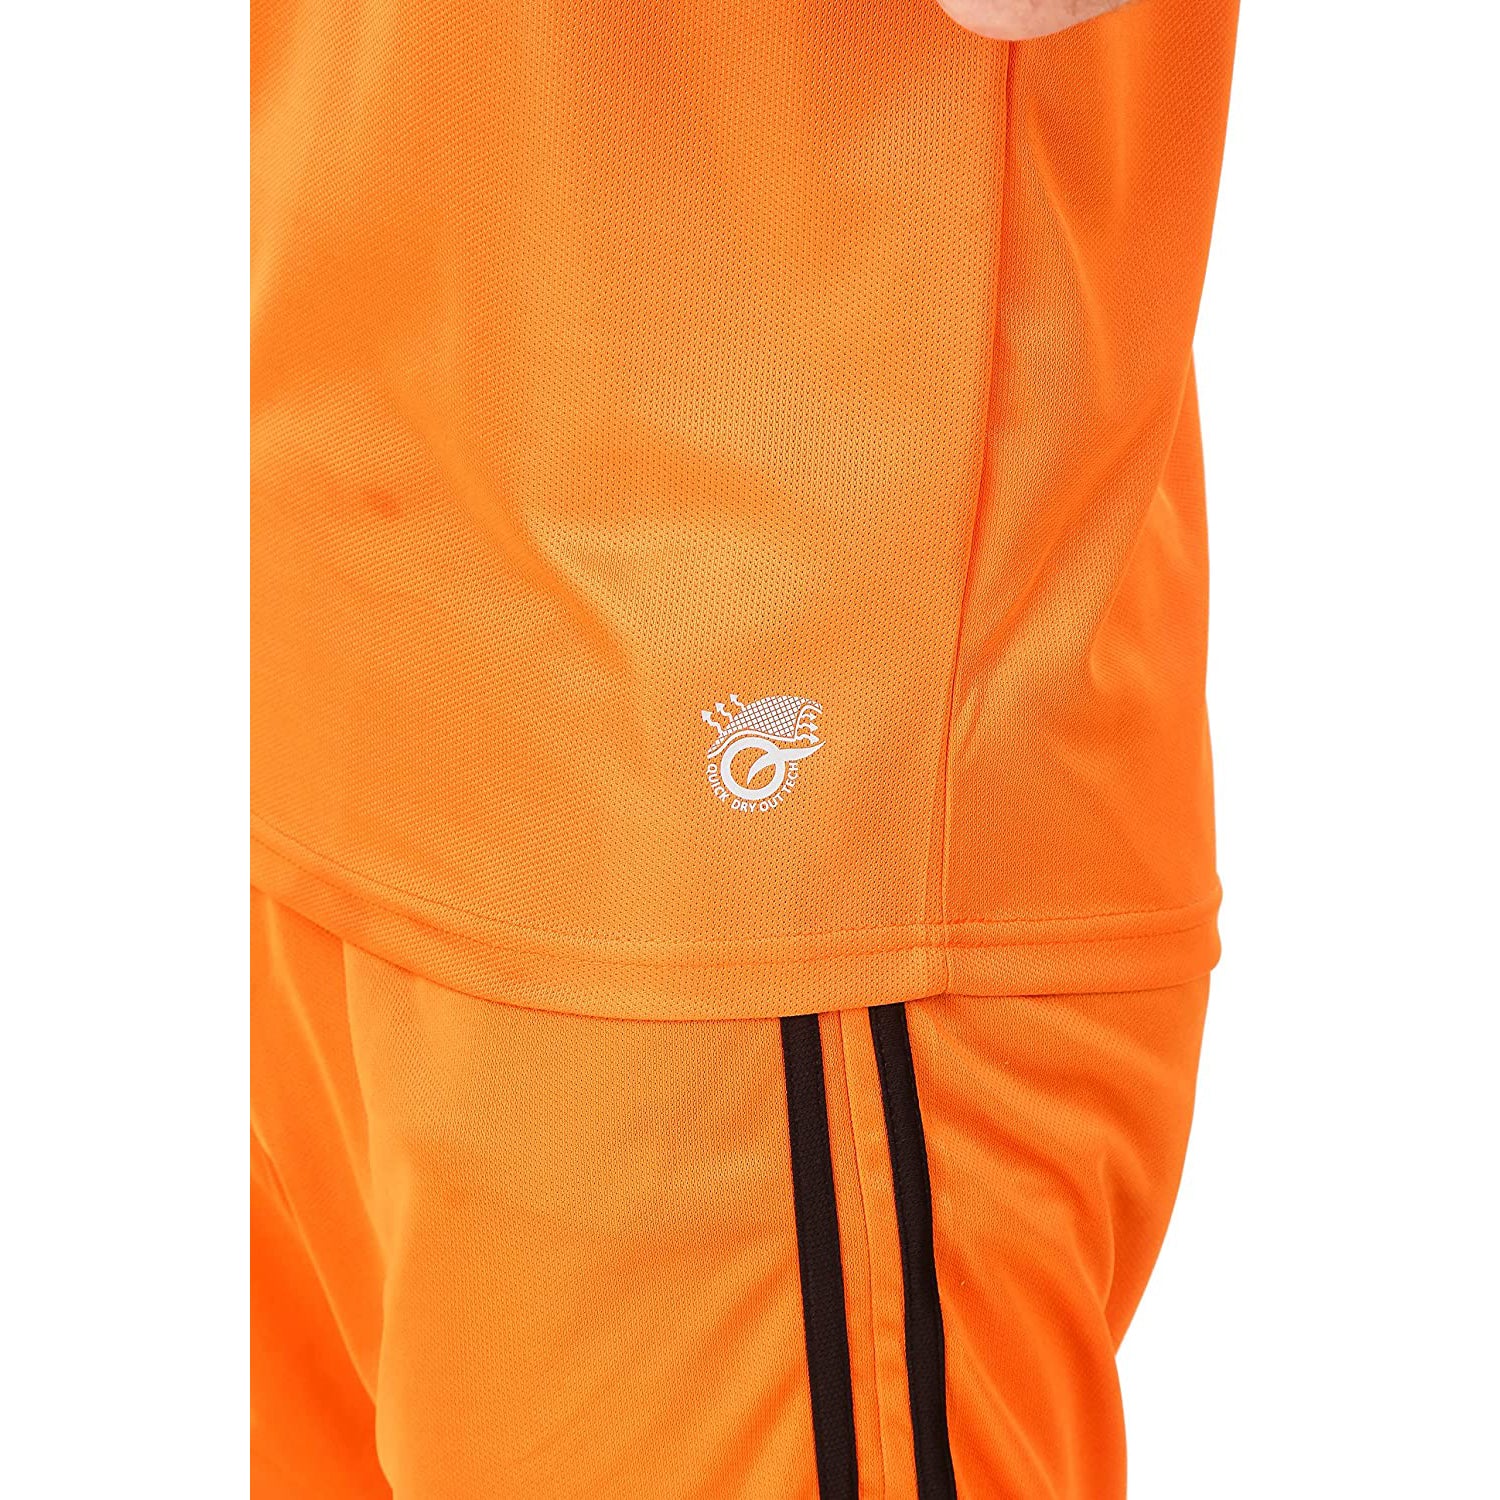 Nivia 2020 Ultra Jersey Set for Men, Orange/Black - Best Price online Prokicksports.com